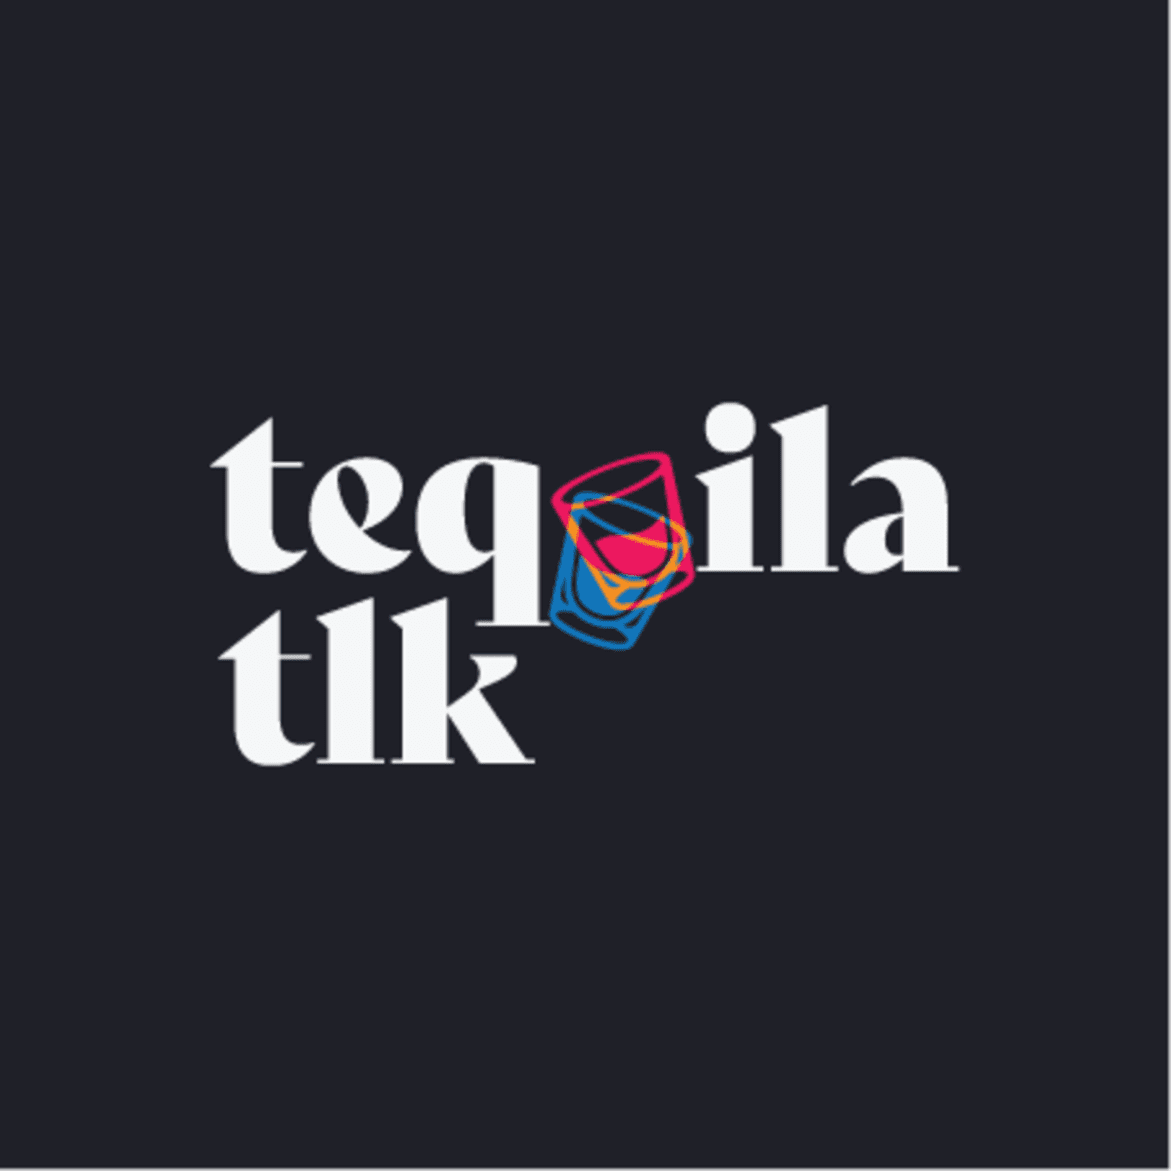 Black Podcasting - "Turn Over, Spread Cheeks" | TequilaTlk!